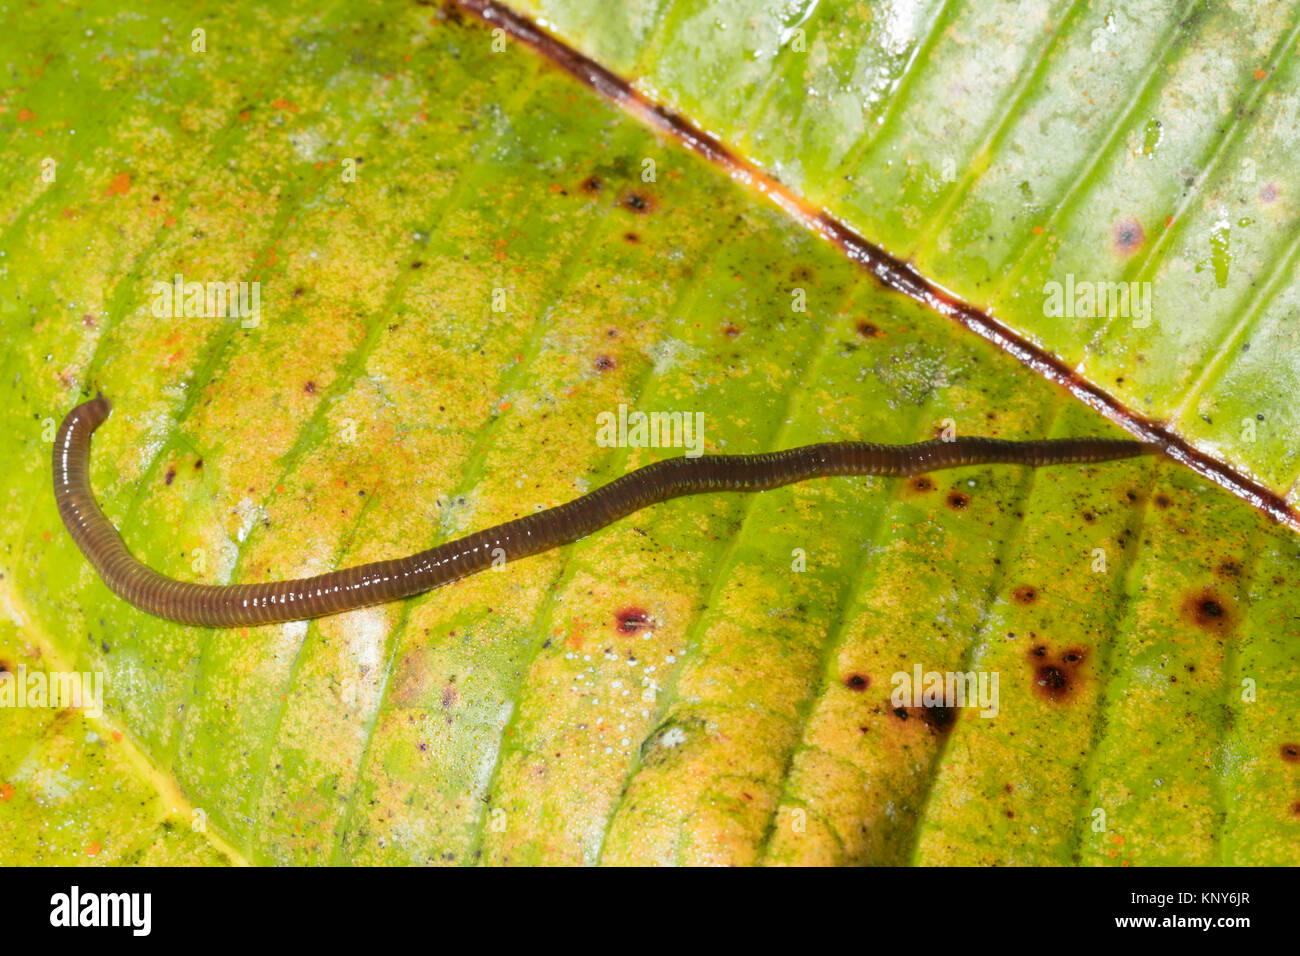 Arboreal earthworm. Climbing on the leaf of a shrub in the rainforest understory at night in the Cordillera del Condor, the Ecuadforian Amazon. Stock Photo